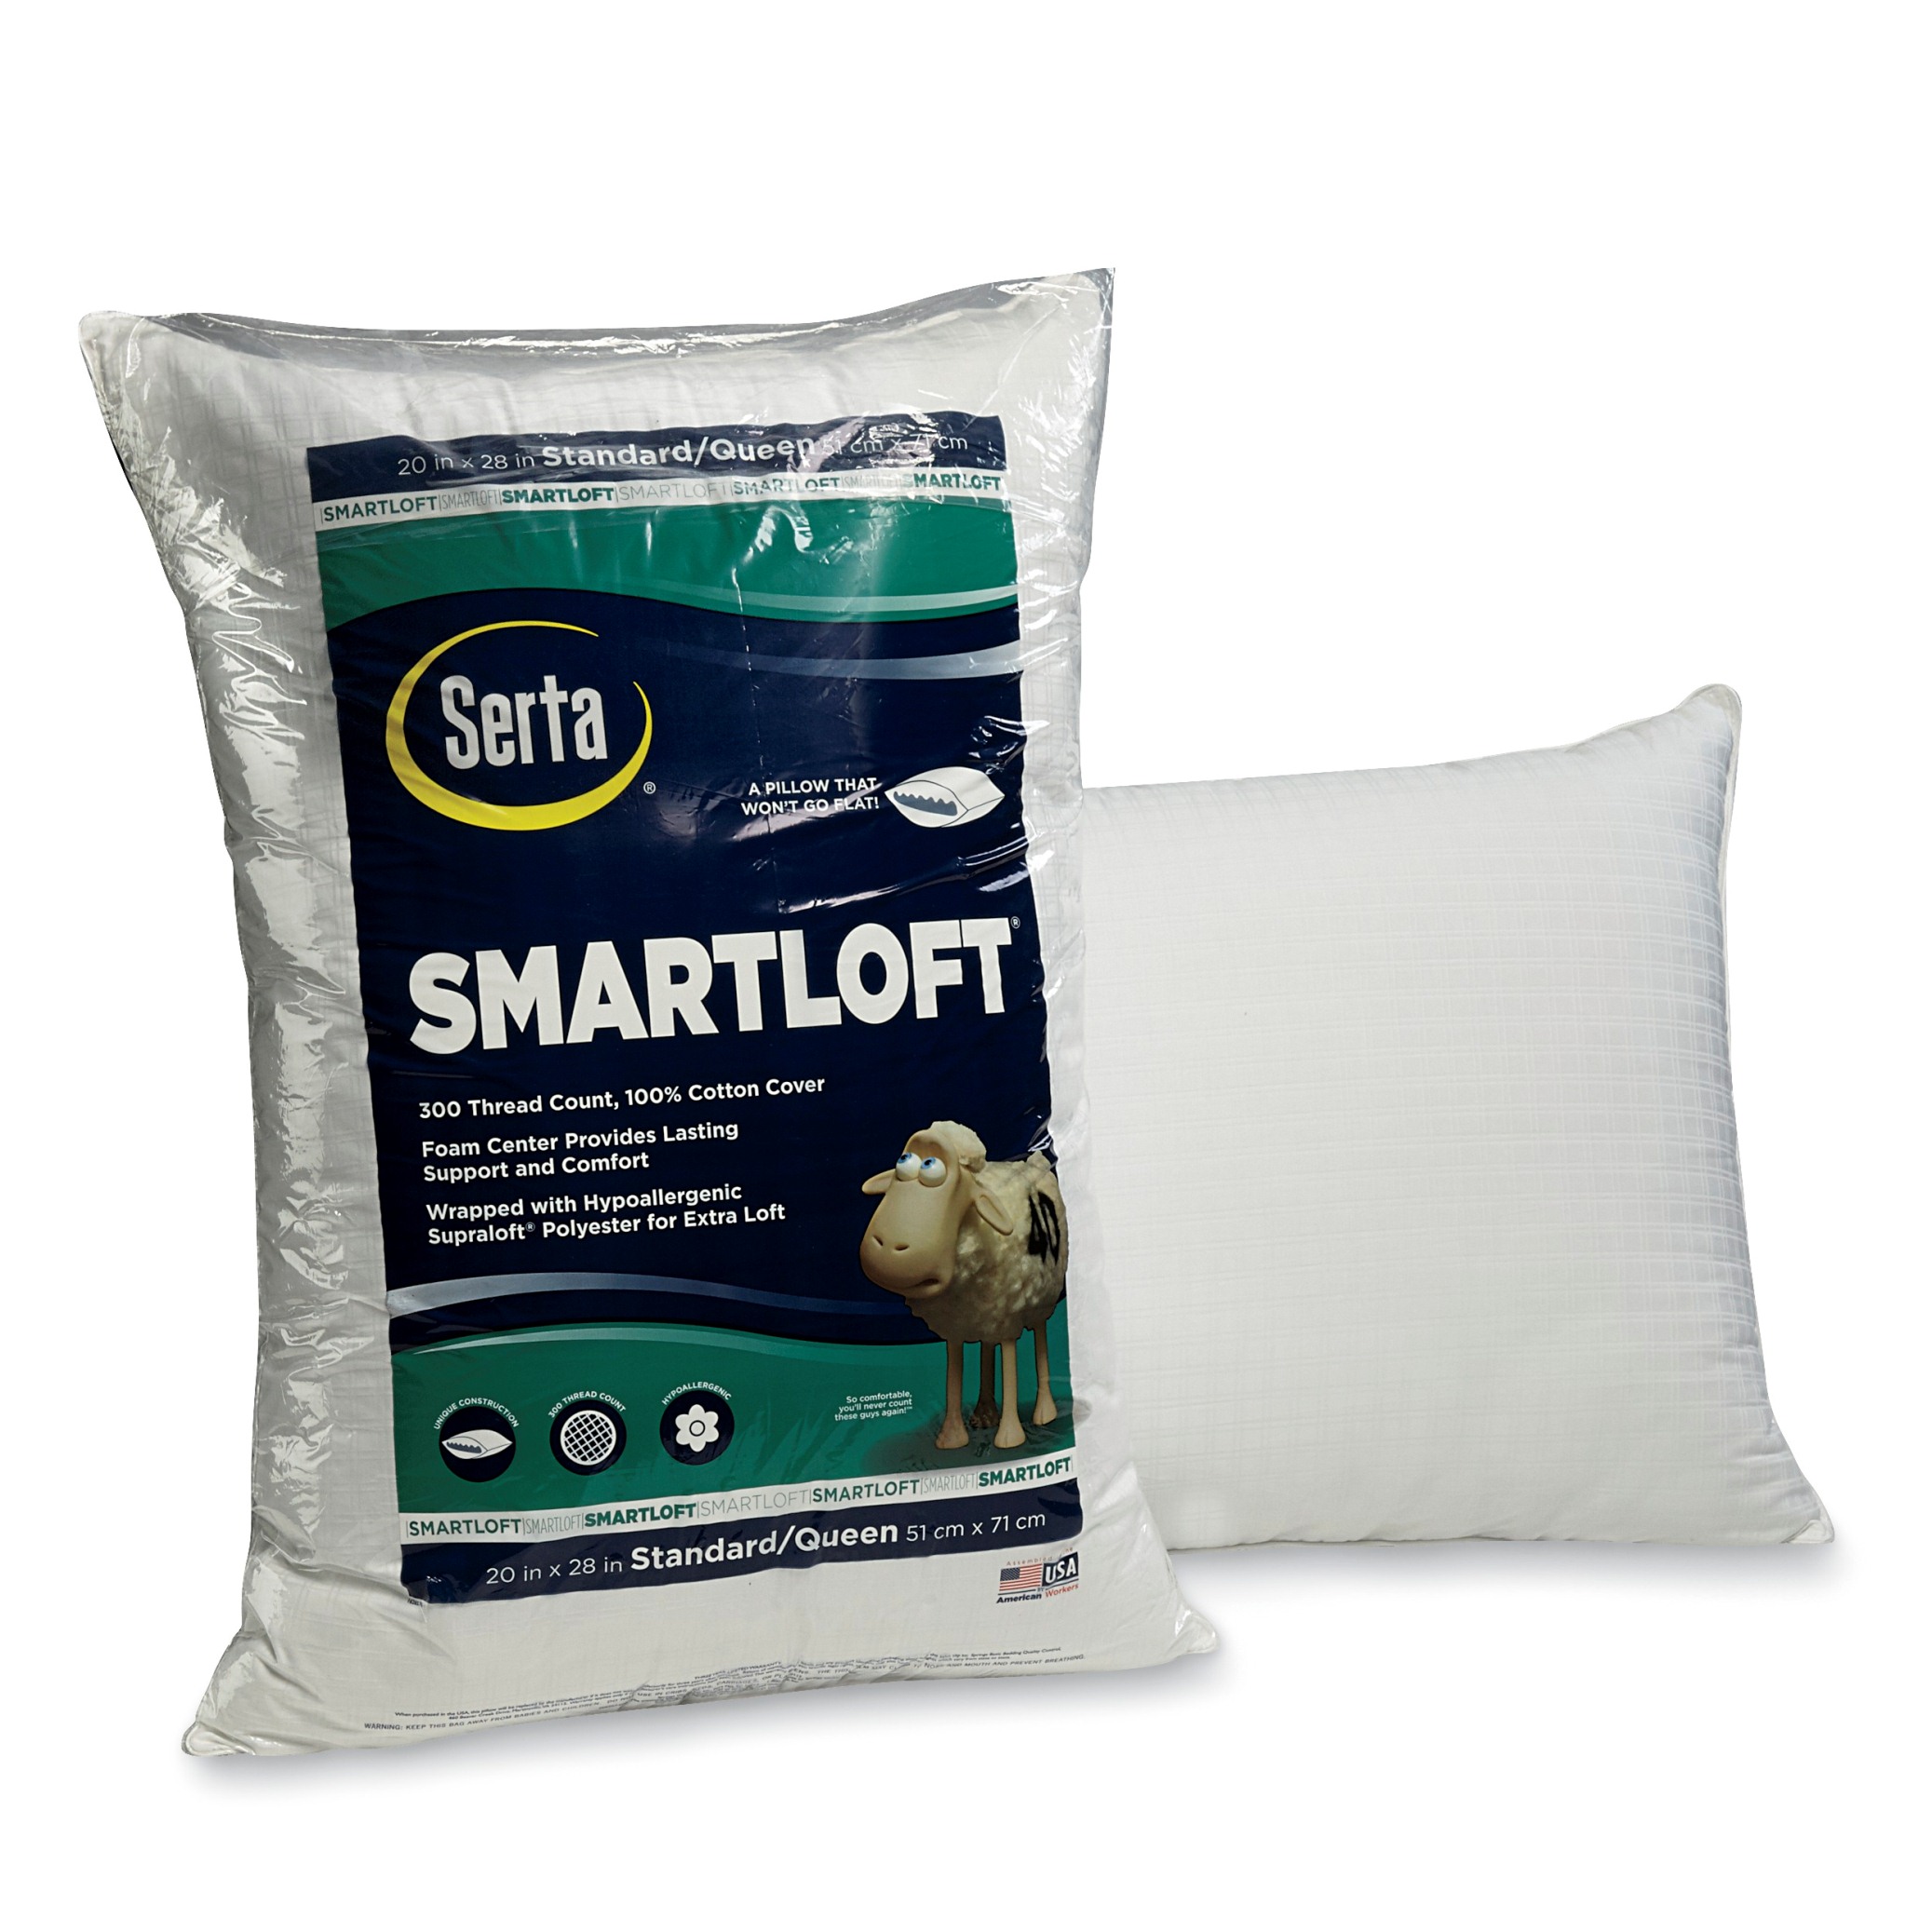 Serta Smartloft Hypoallergenic Pillow